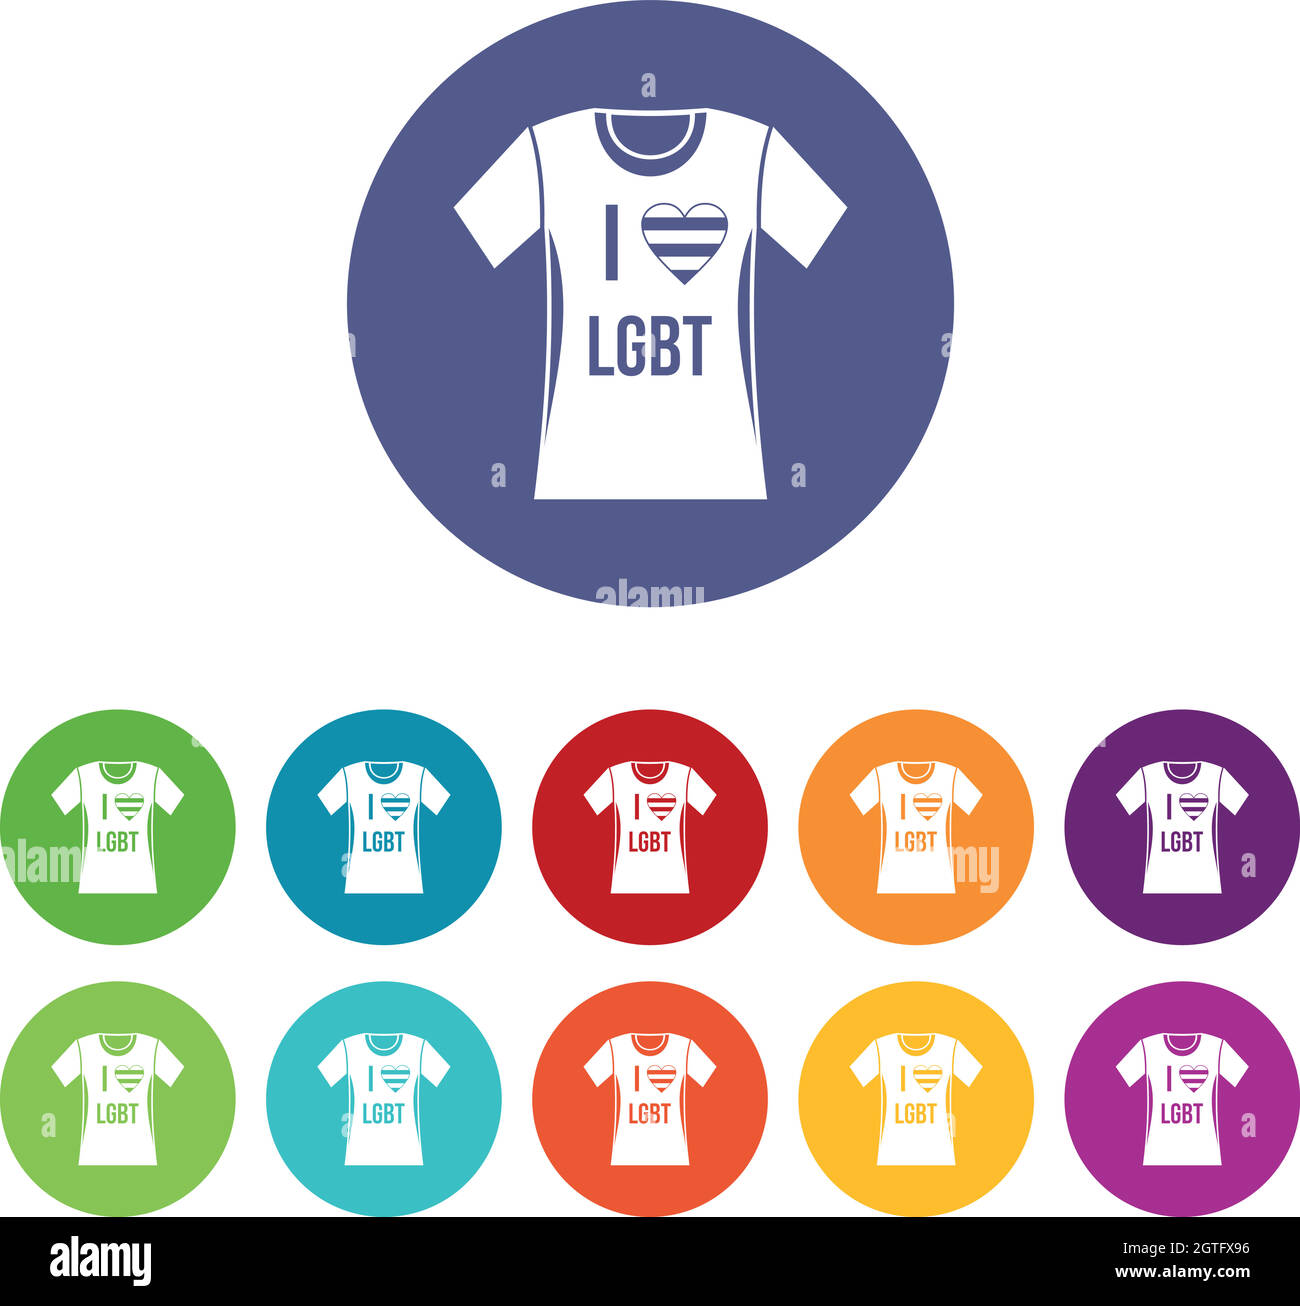 T-shirt i love LGBT set icons Stock Vector